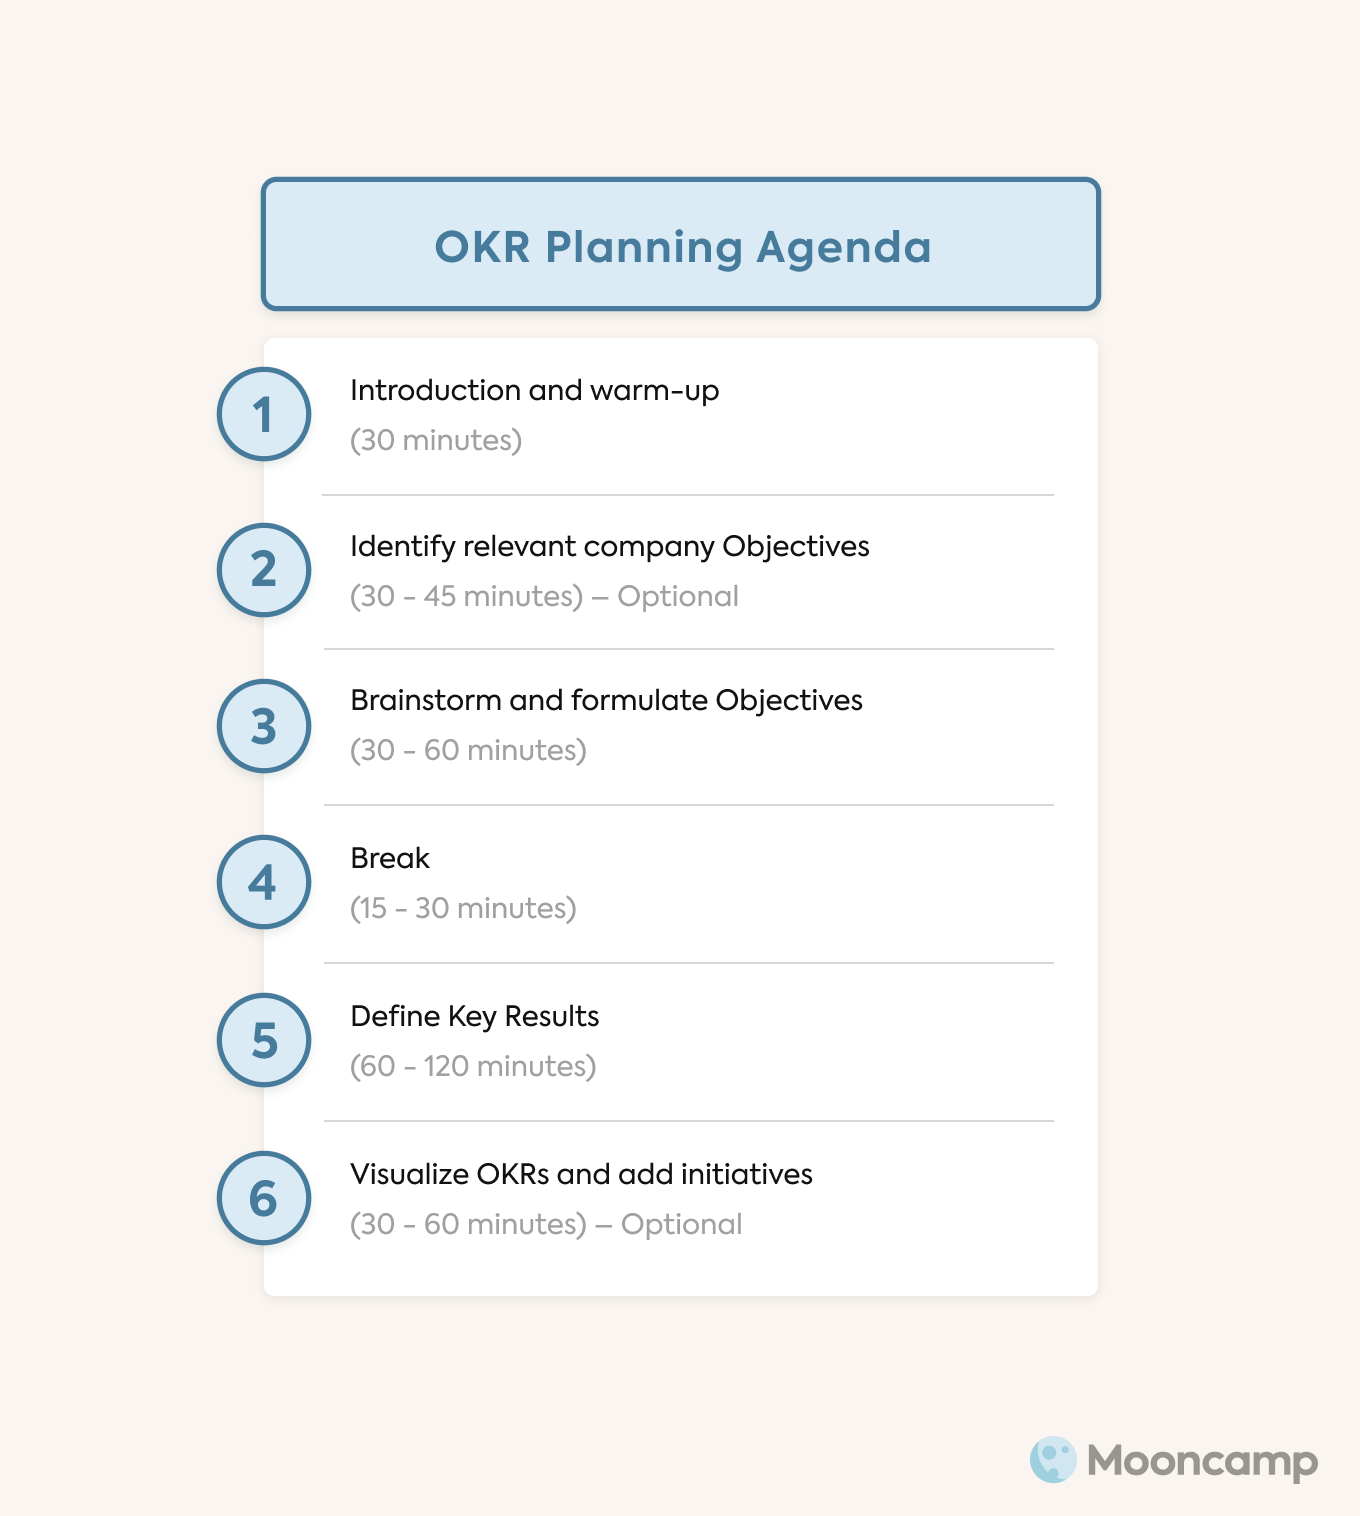 OKR Planning agenda